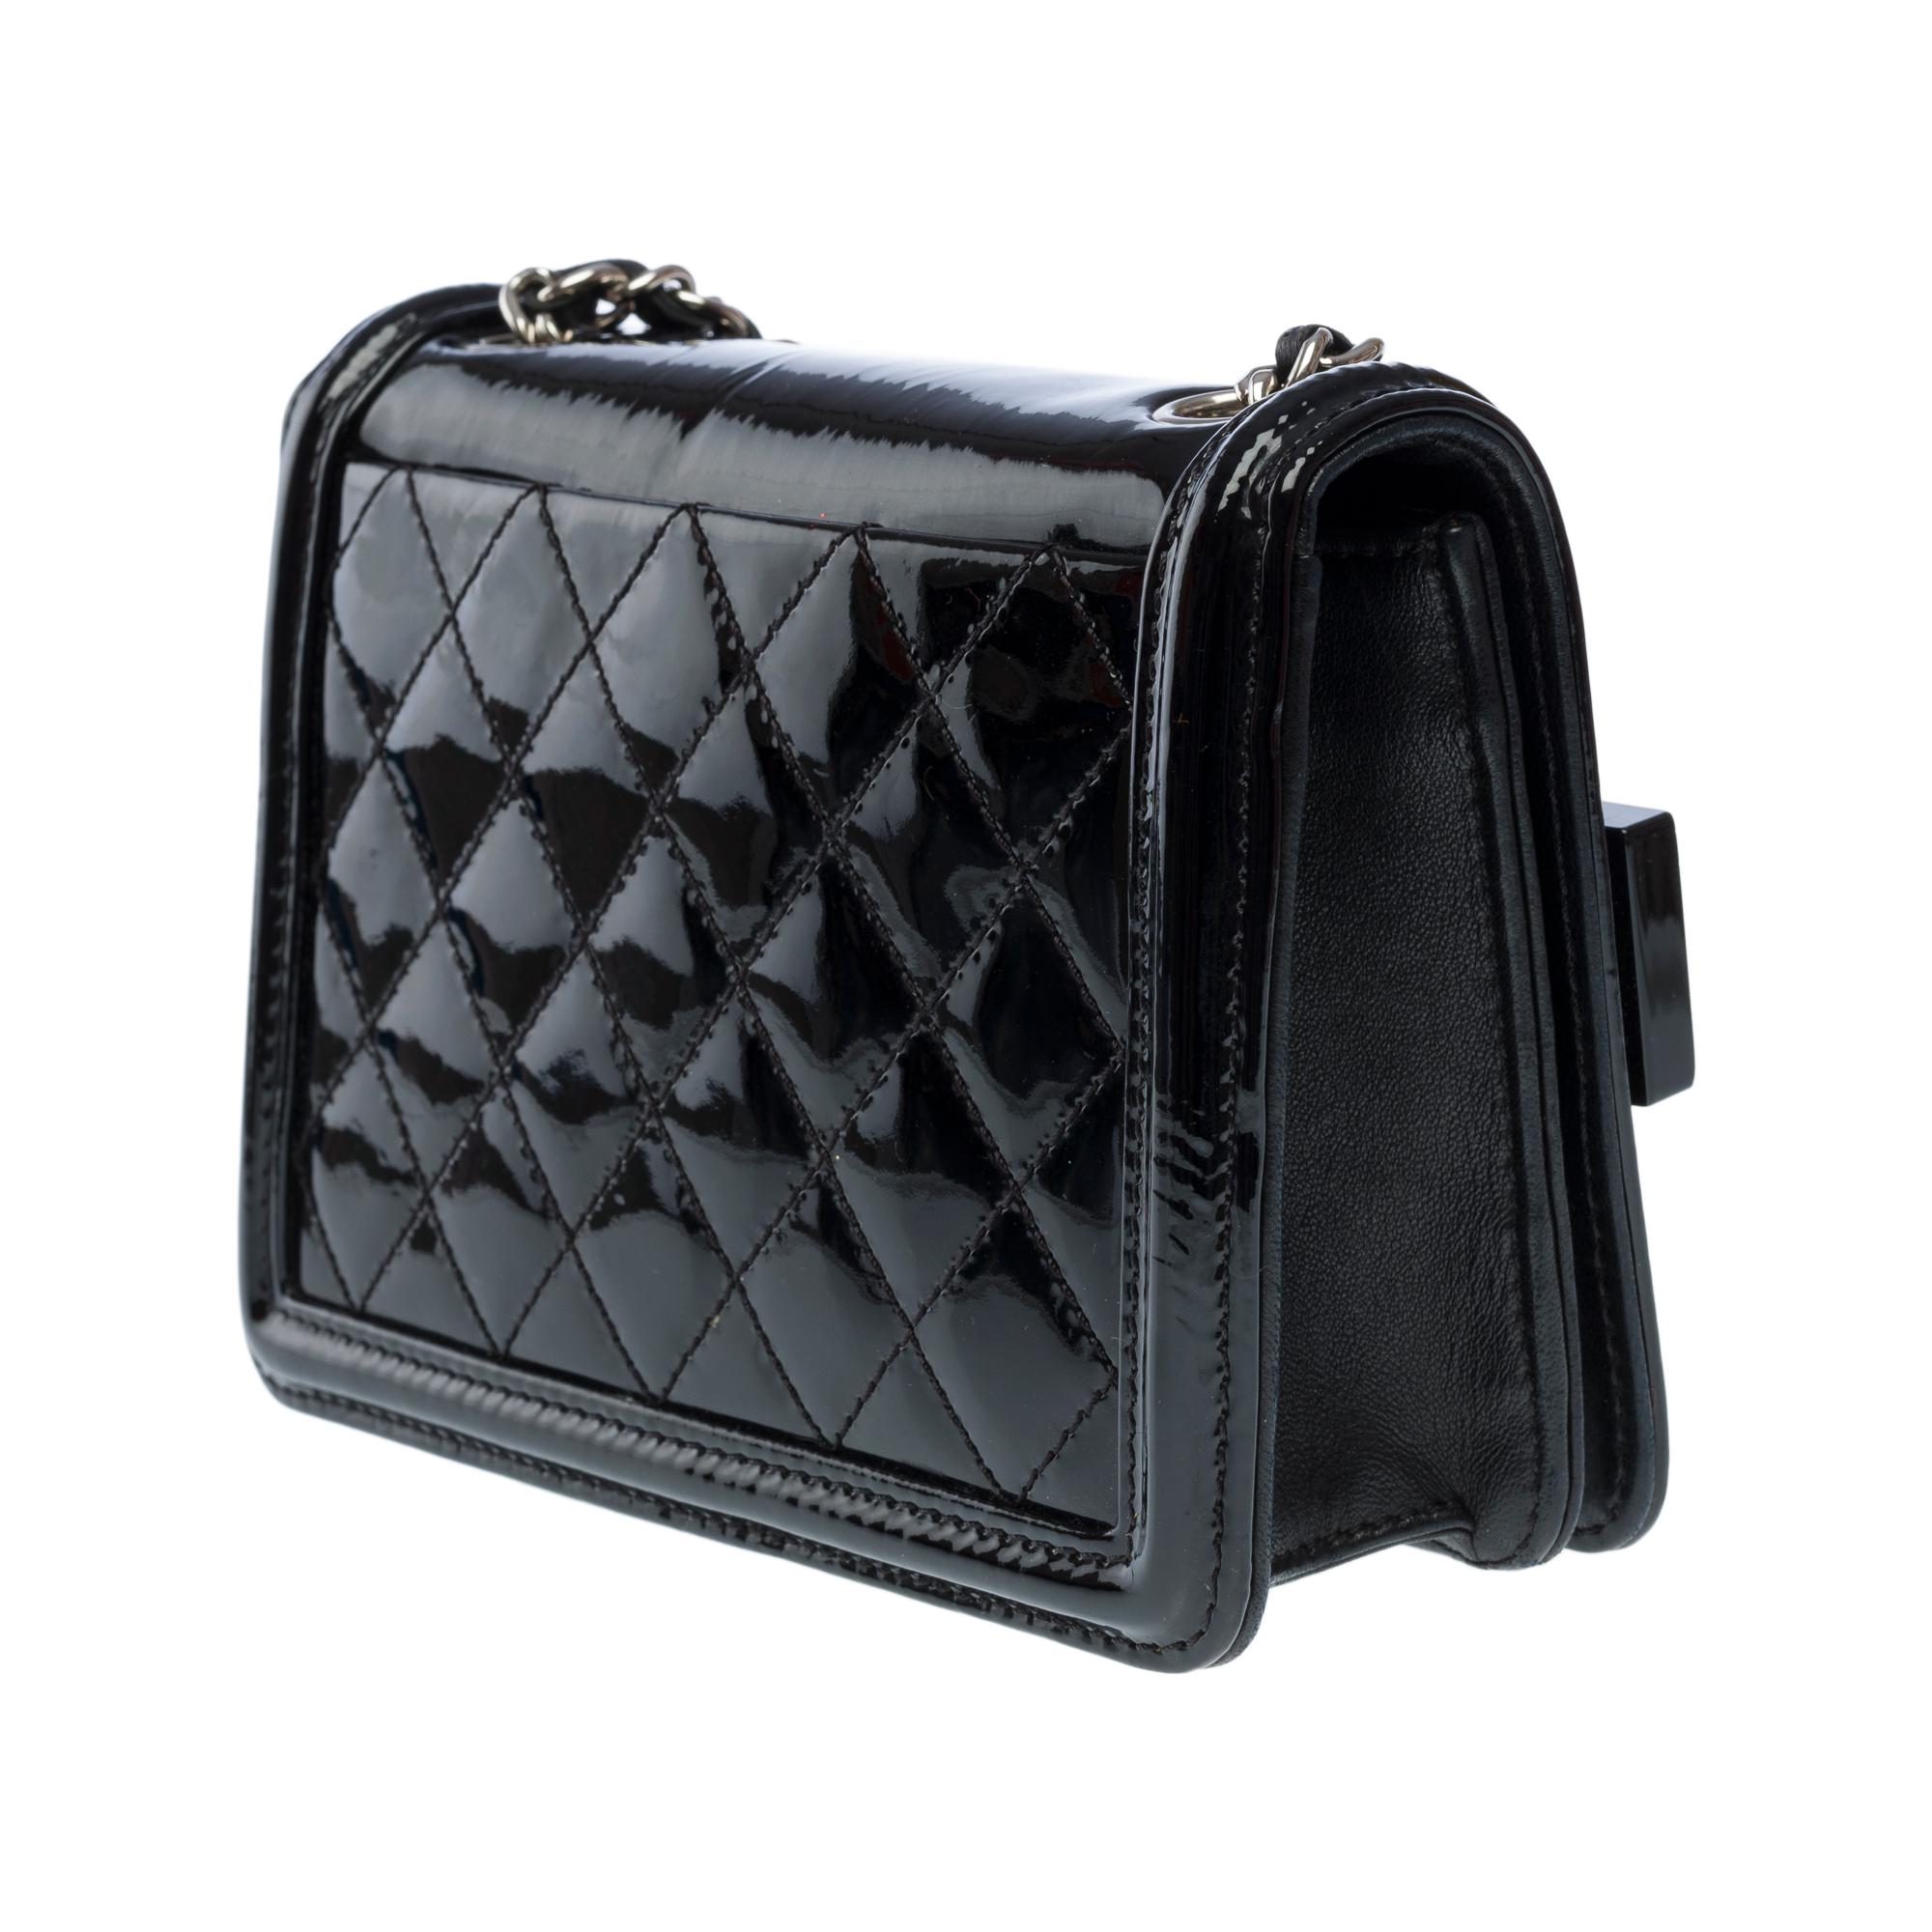 Limited edition Chanel Mini Lego Brick shoulder flap bag in Black leather, SHW For Sale 2